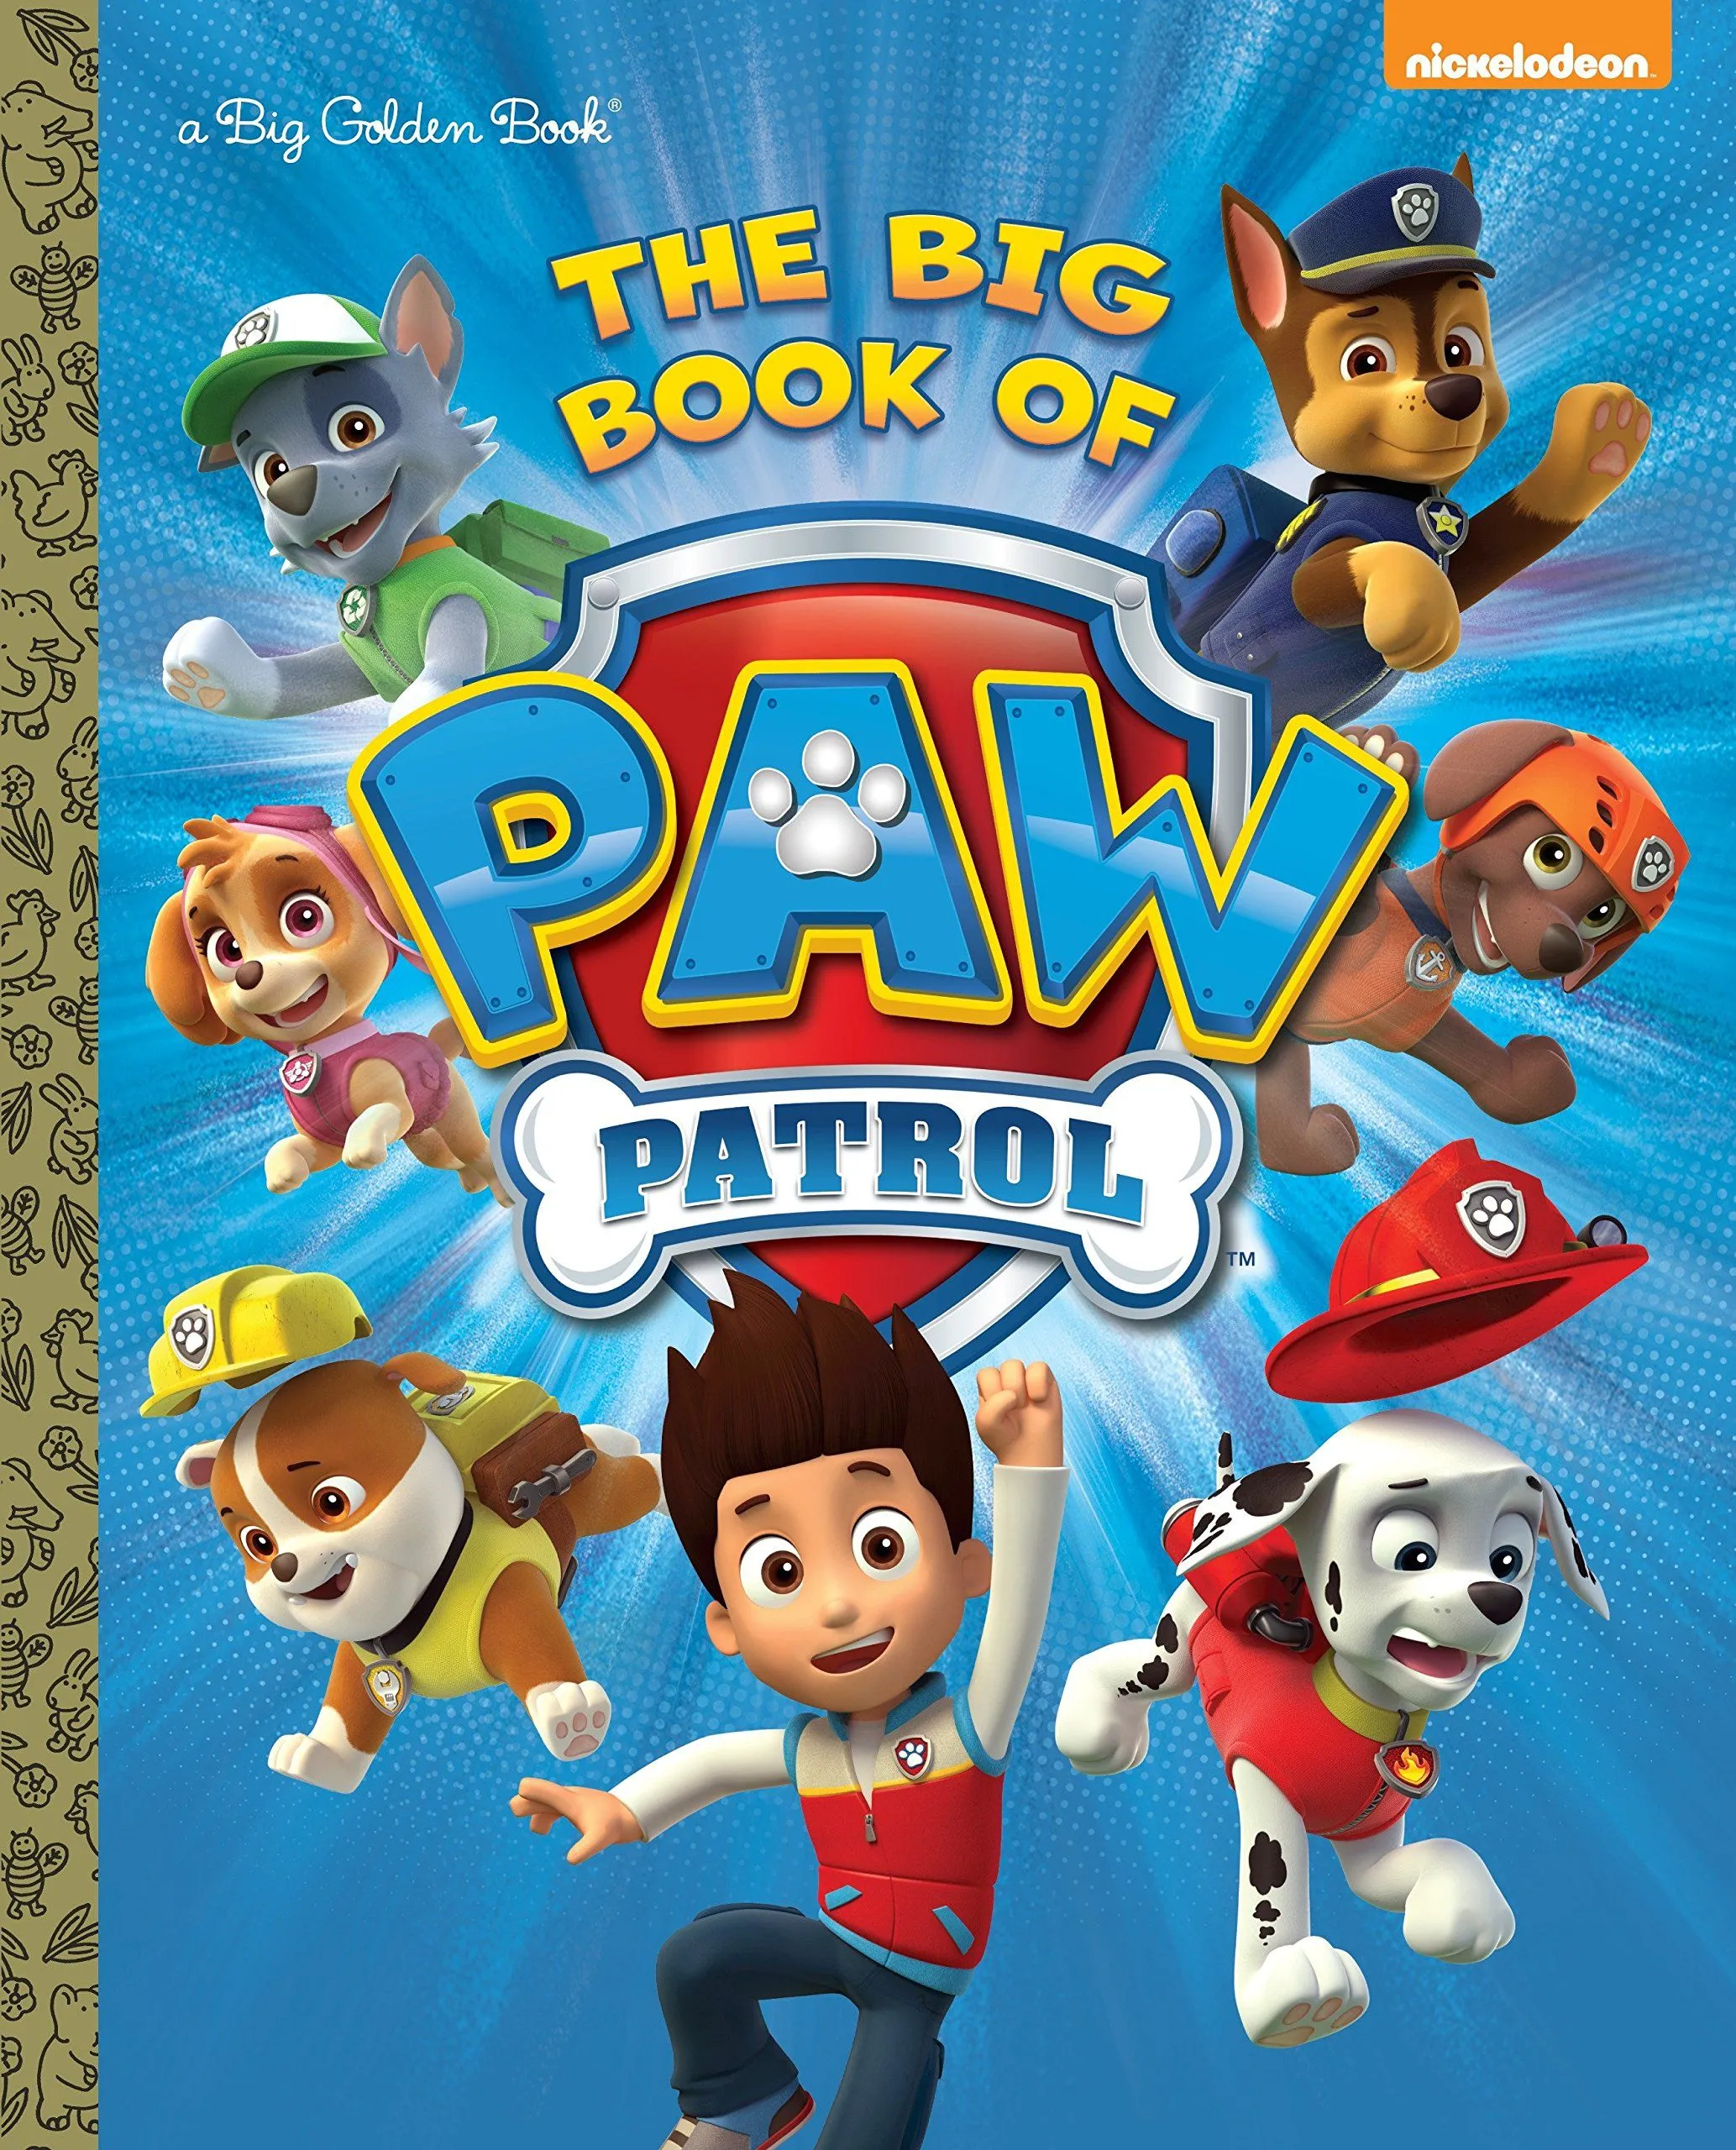 The Big Book of Paw Patrol (Paw Patrol): Amazon.ca: Golden Books ...